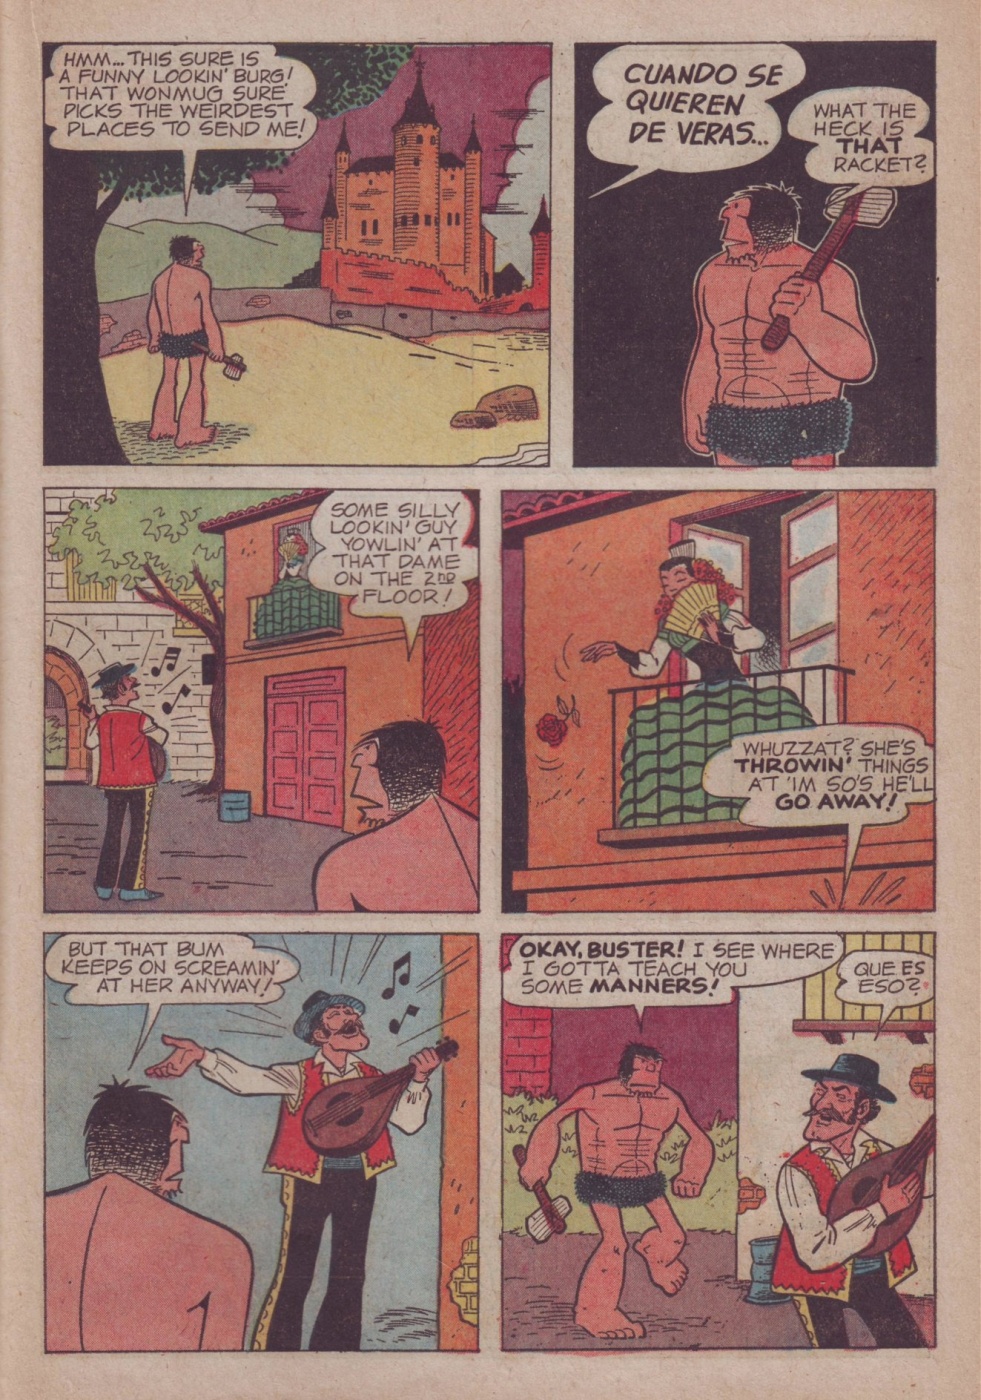 Alley-Oop-Comics (b) (23)